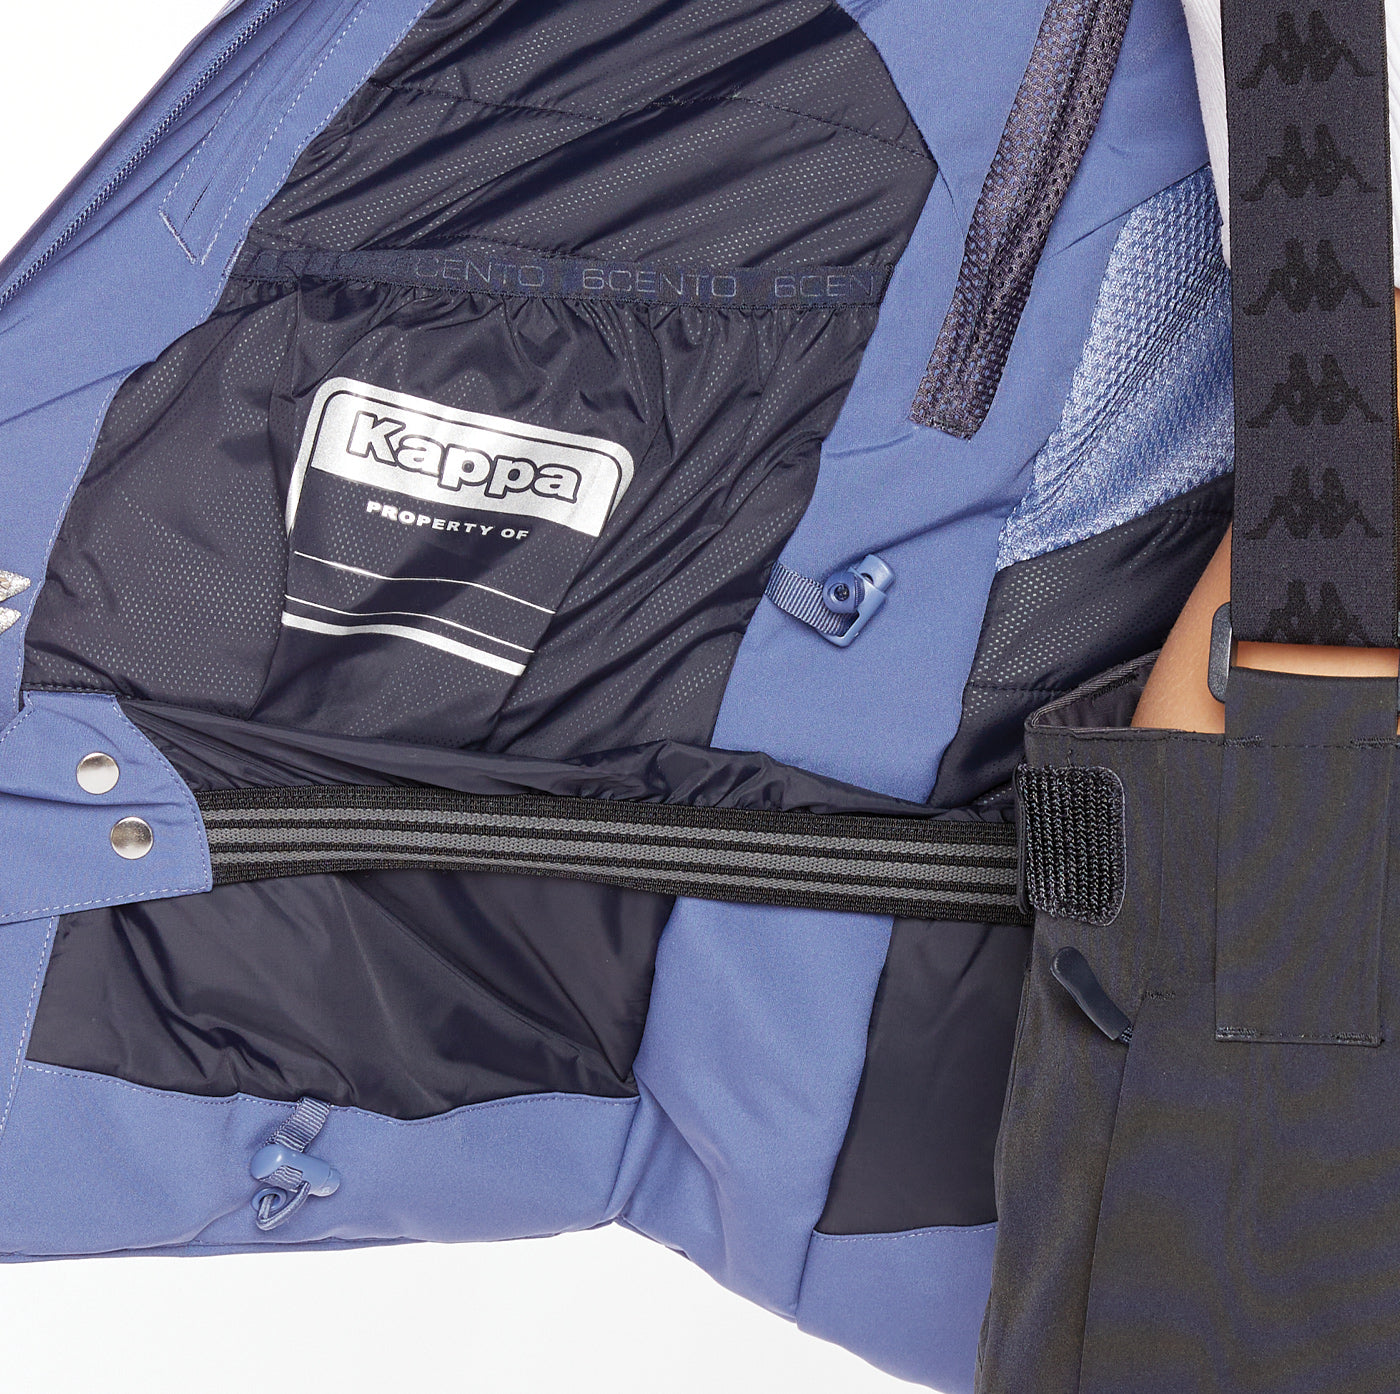 Fiord - Ski Blue 604T Jacket – USA 6Cento Kappa US